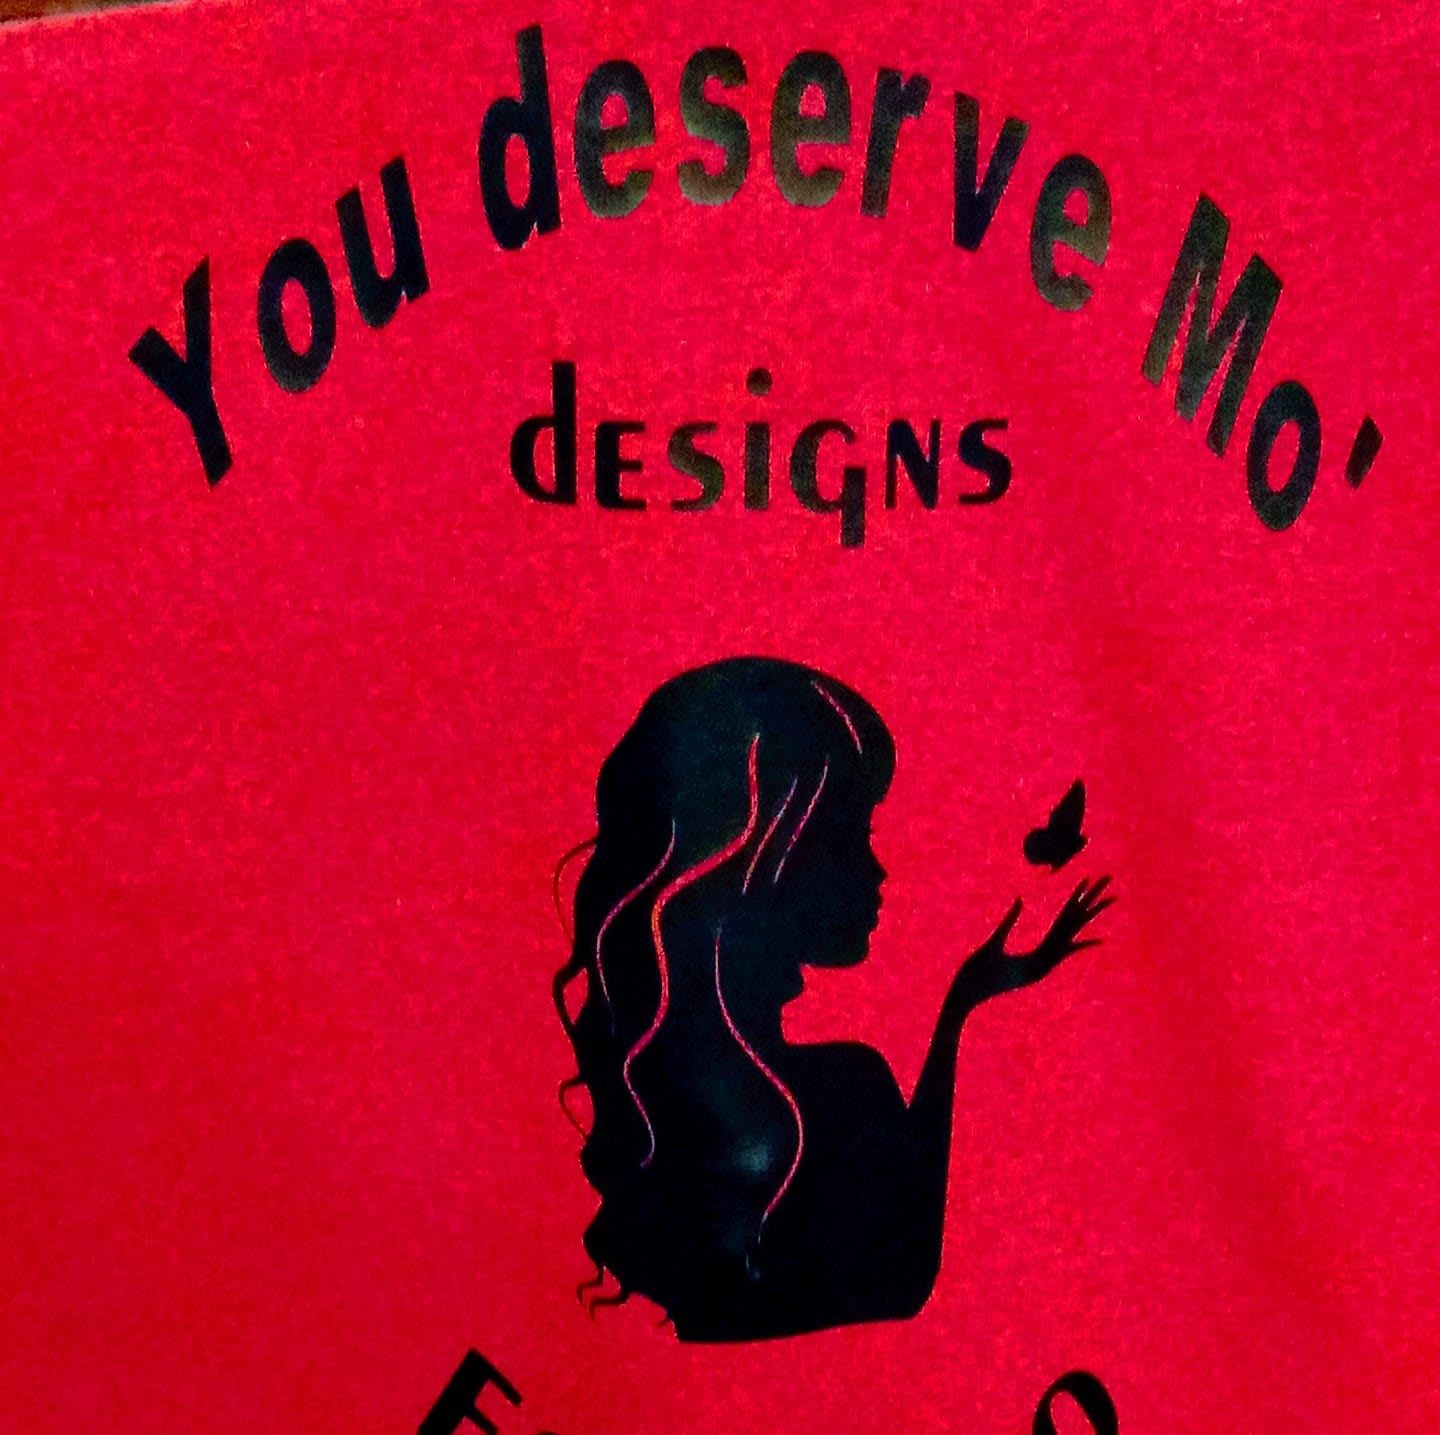 You Deserve Mo’ Designs